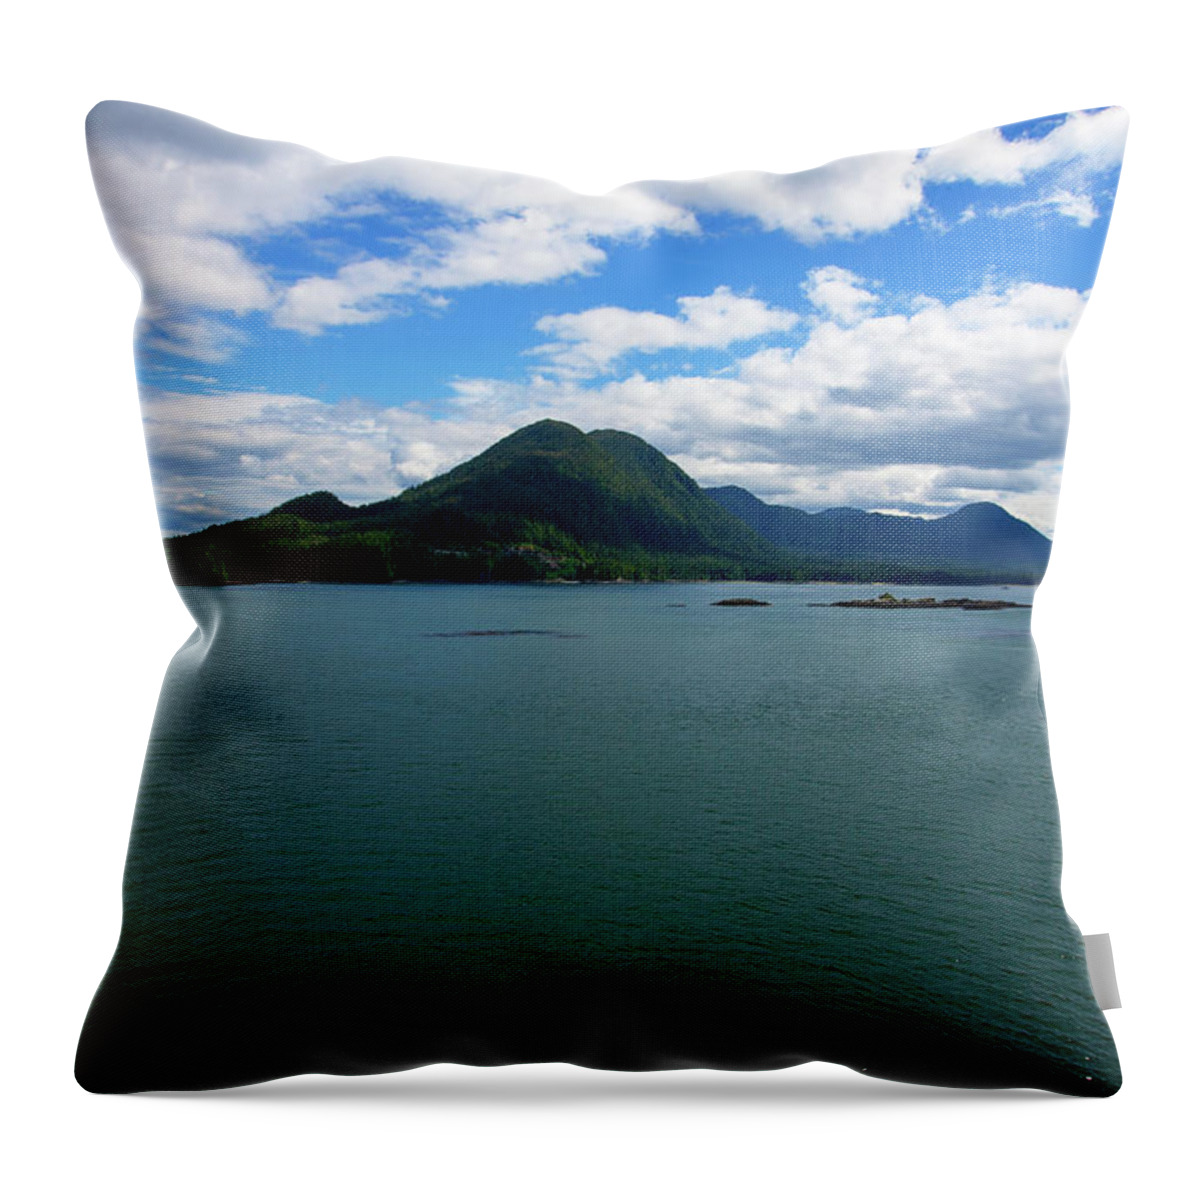 Alaska Throw Pillow featuring the photograph Alaskan Island by Anthony Jones